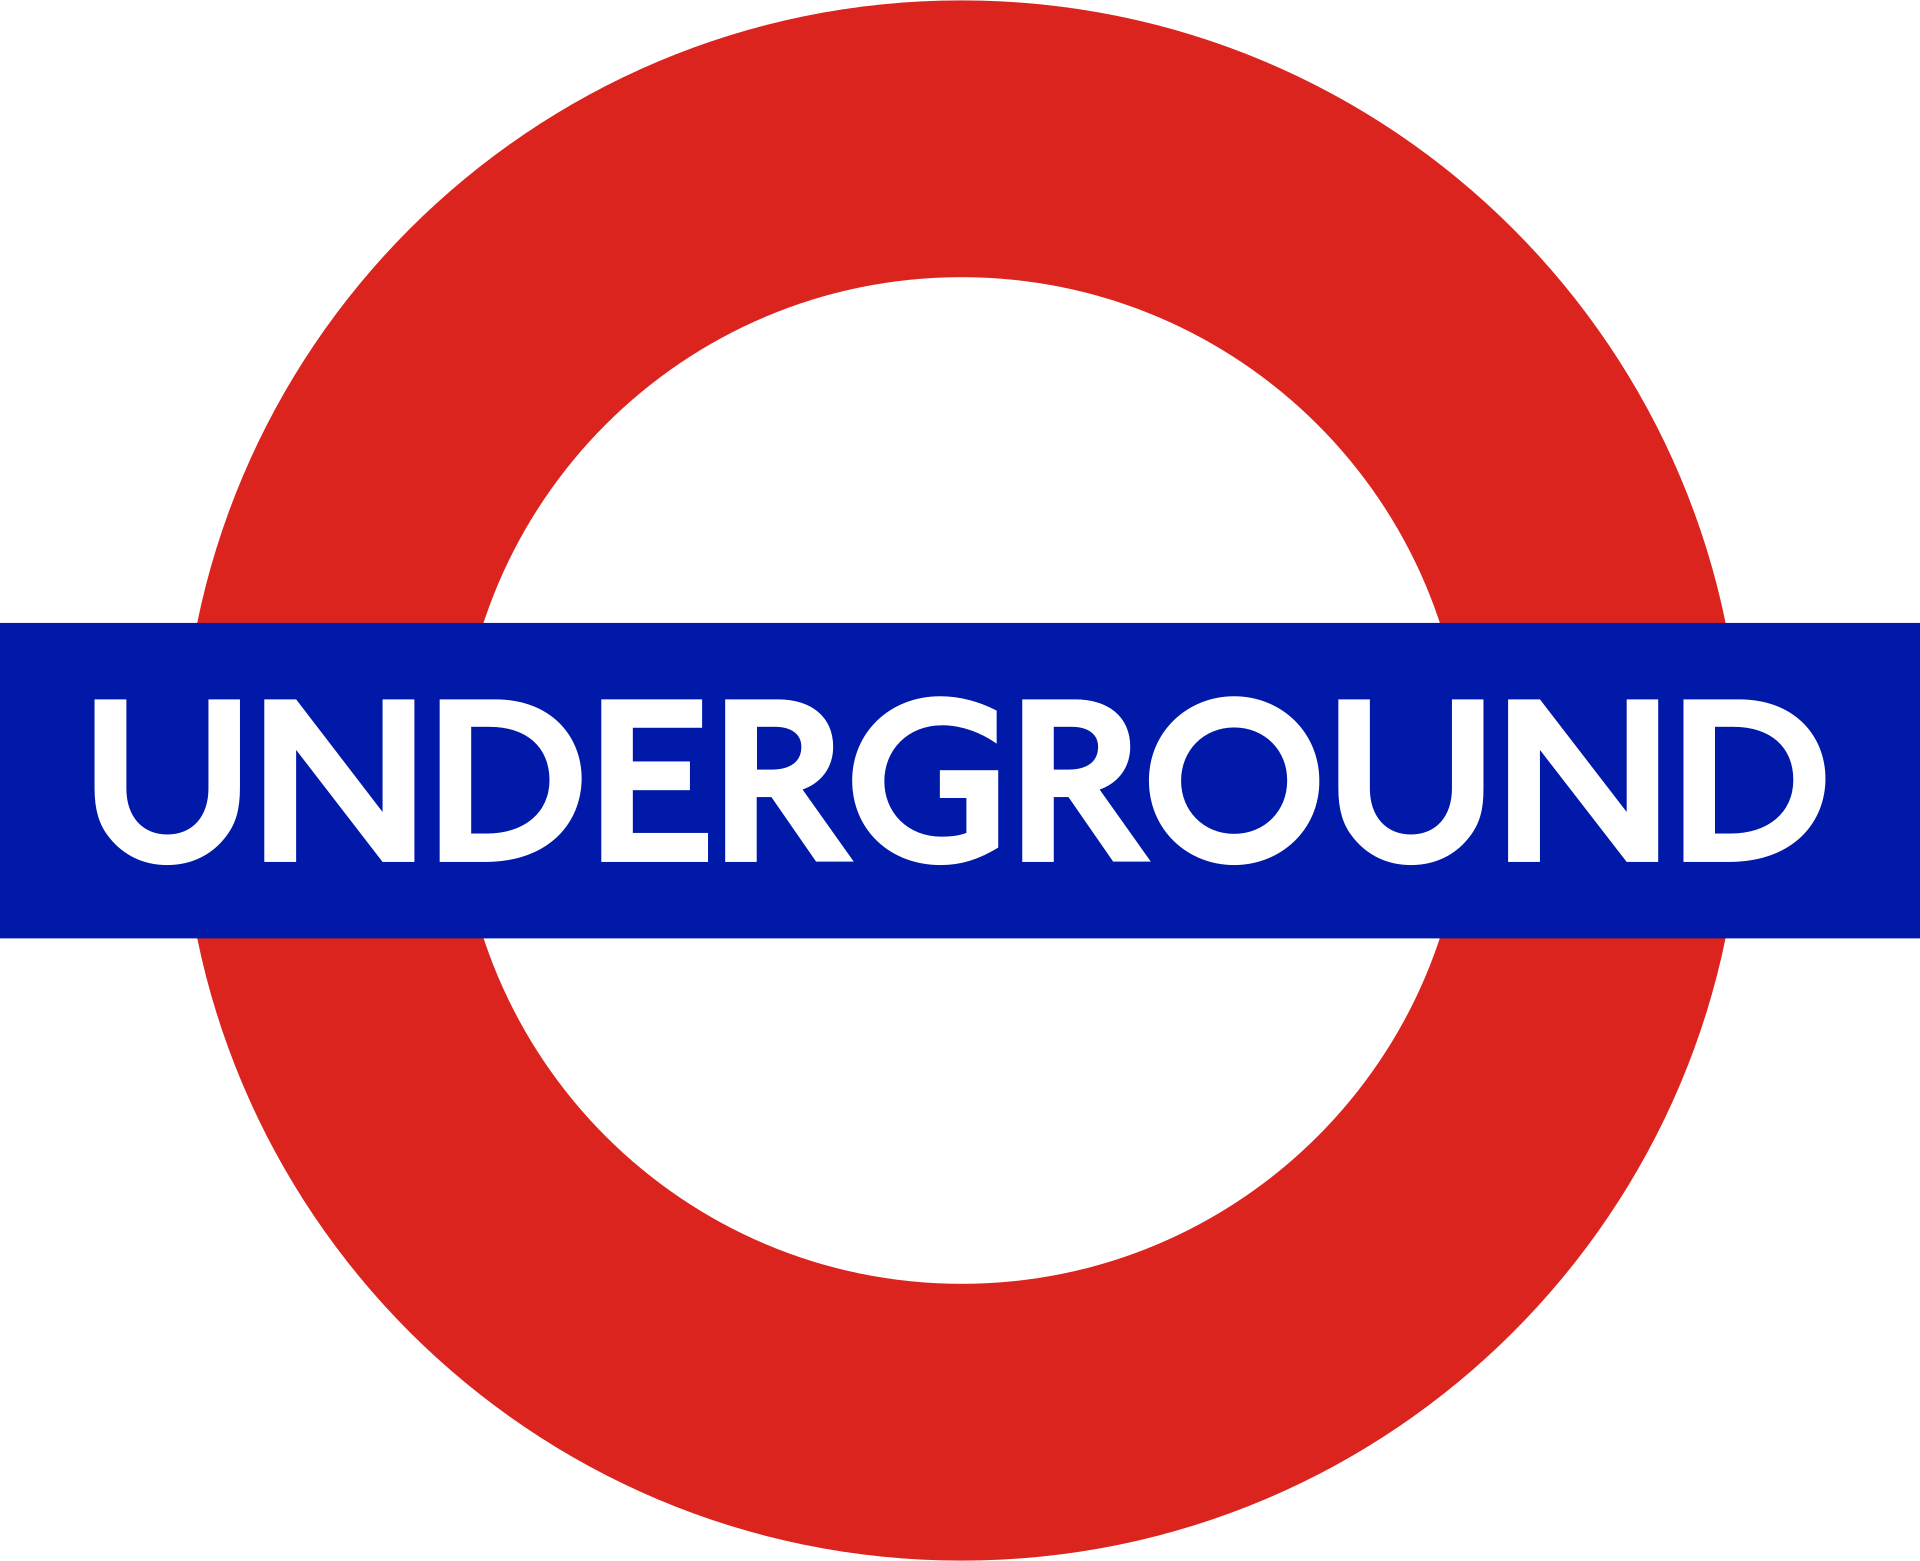 London Bus Logo